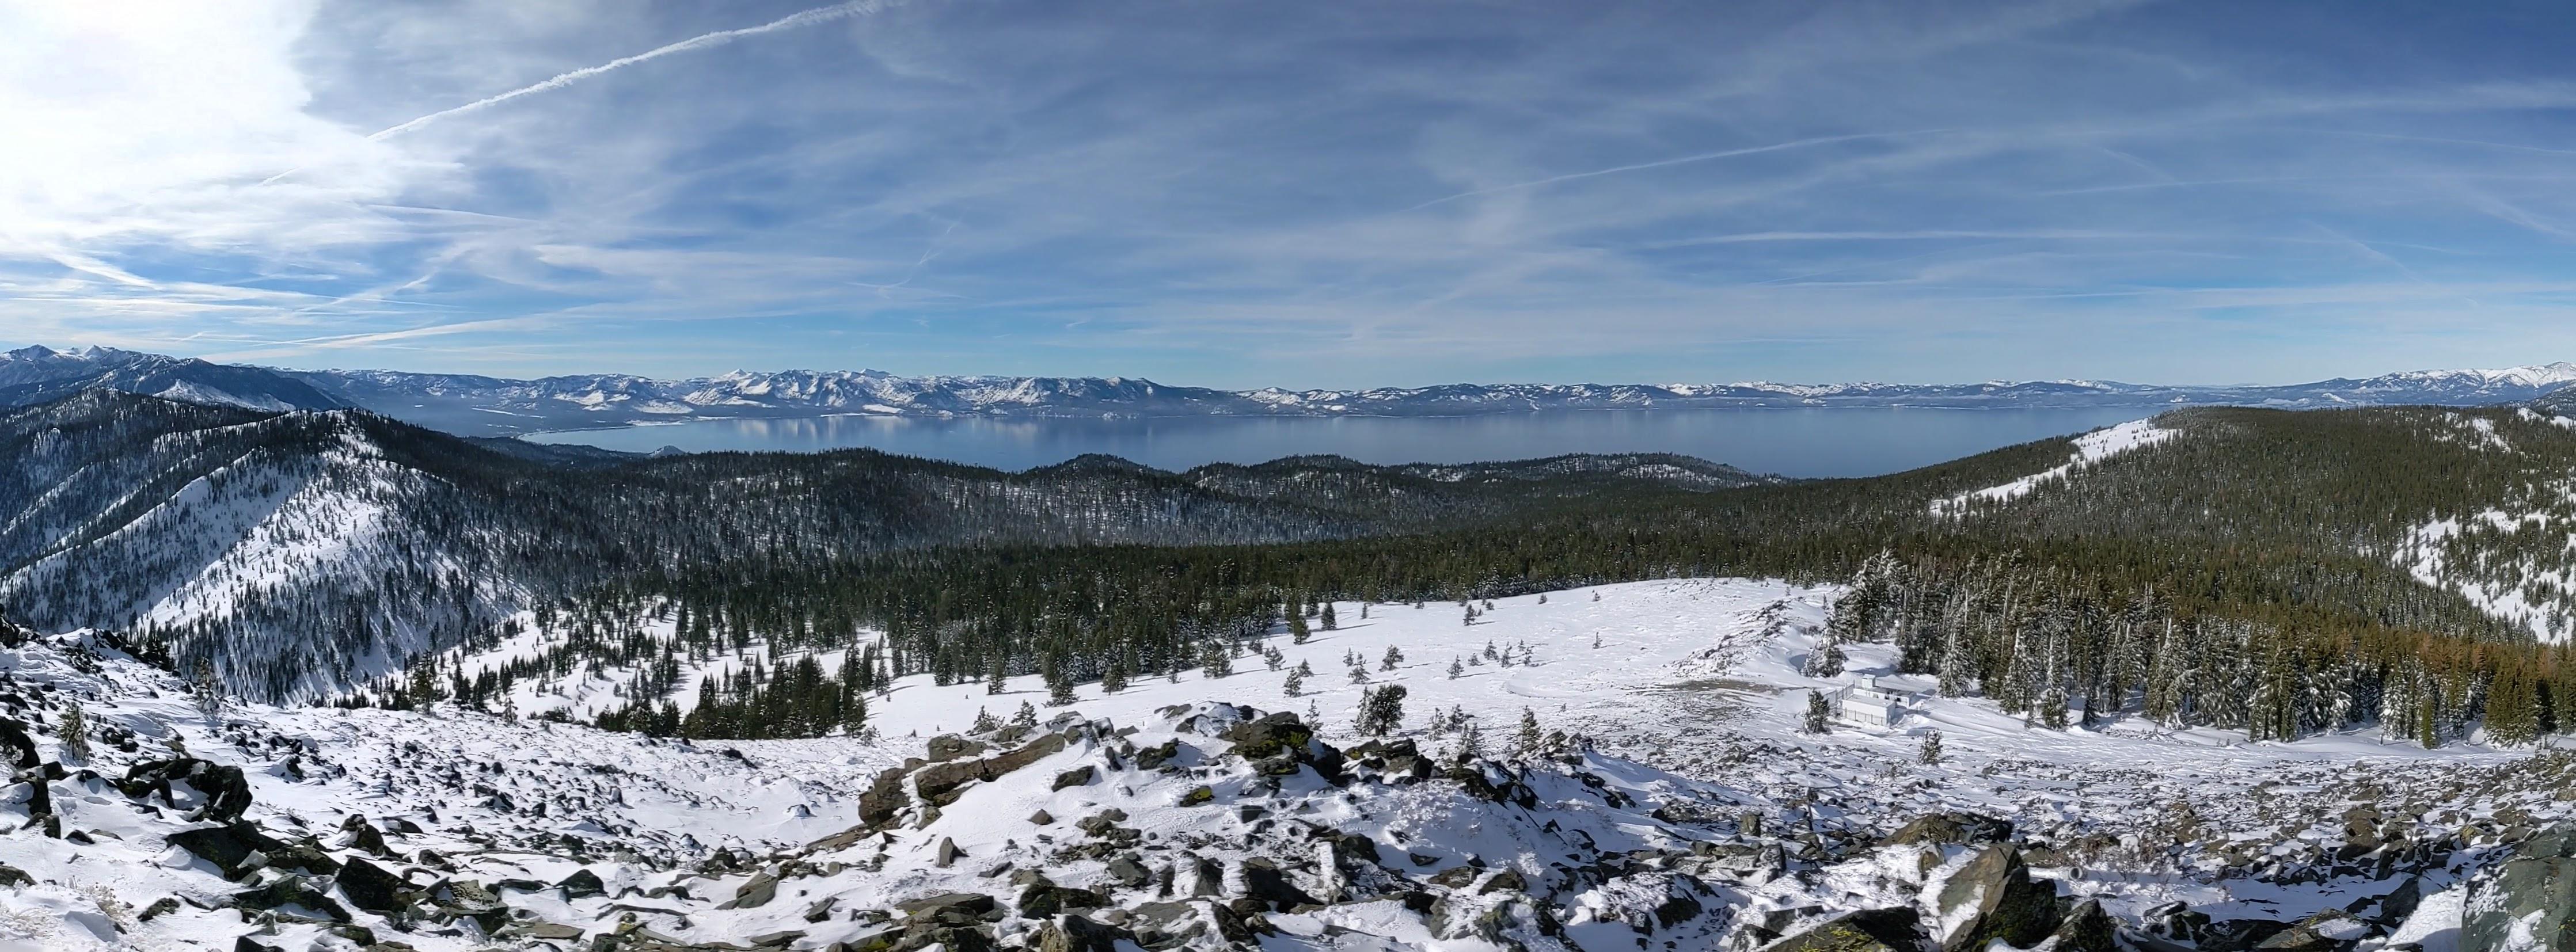 Panoramic view of lake Tahoe